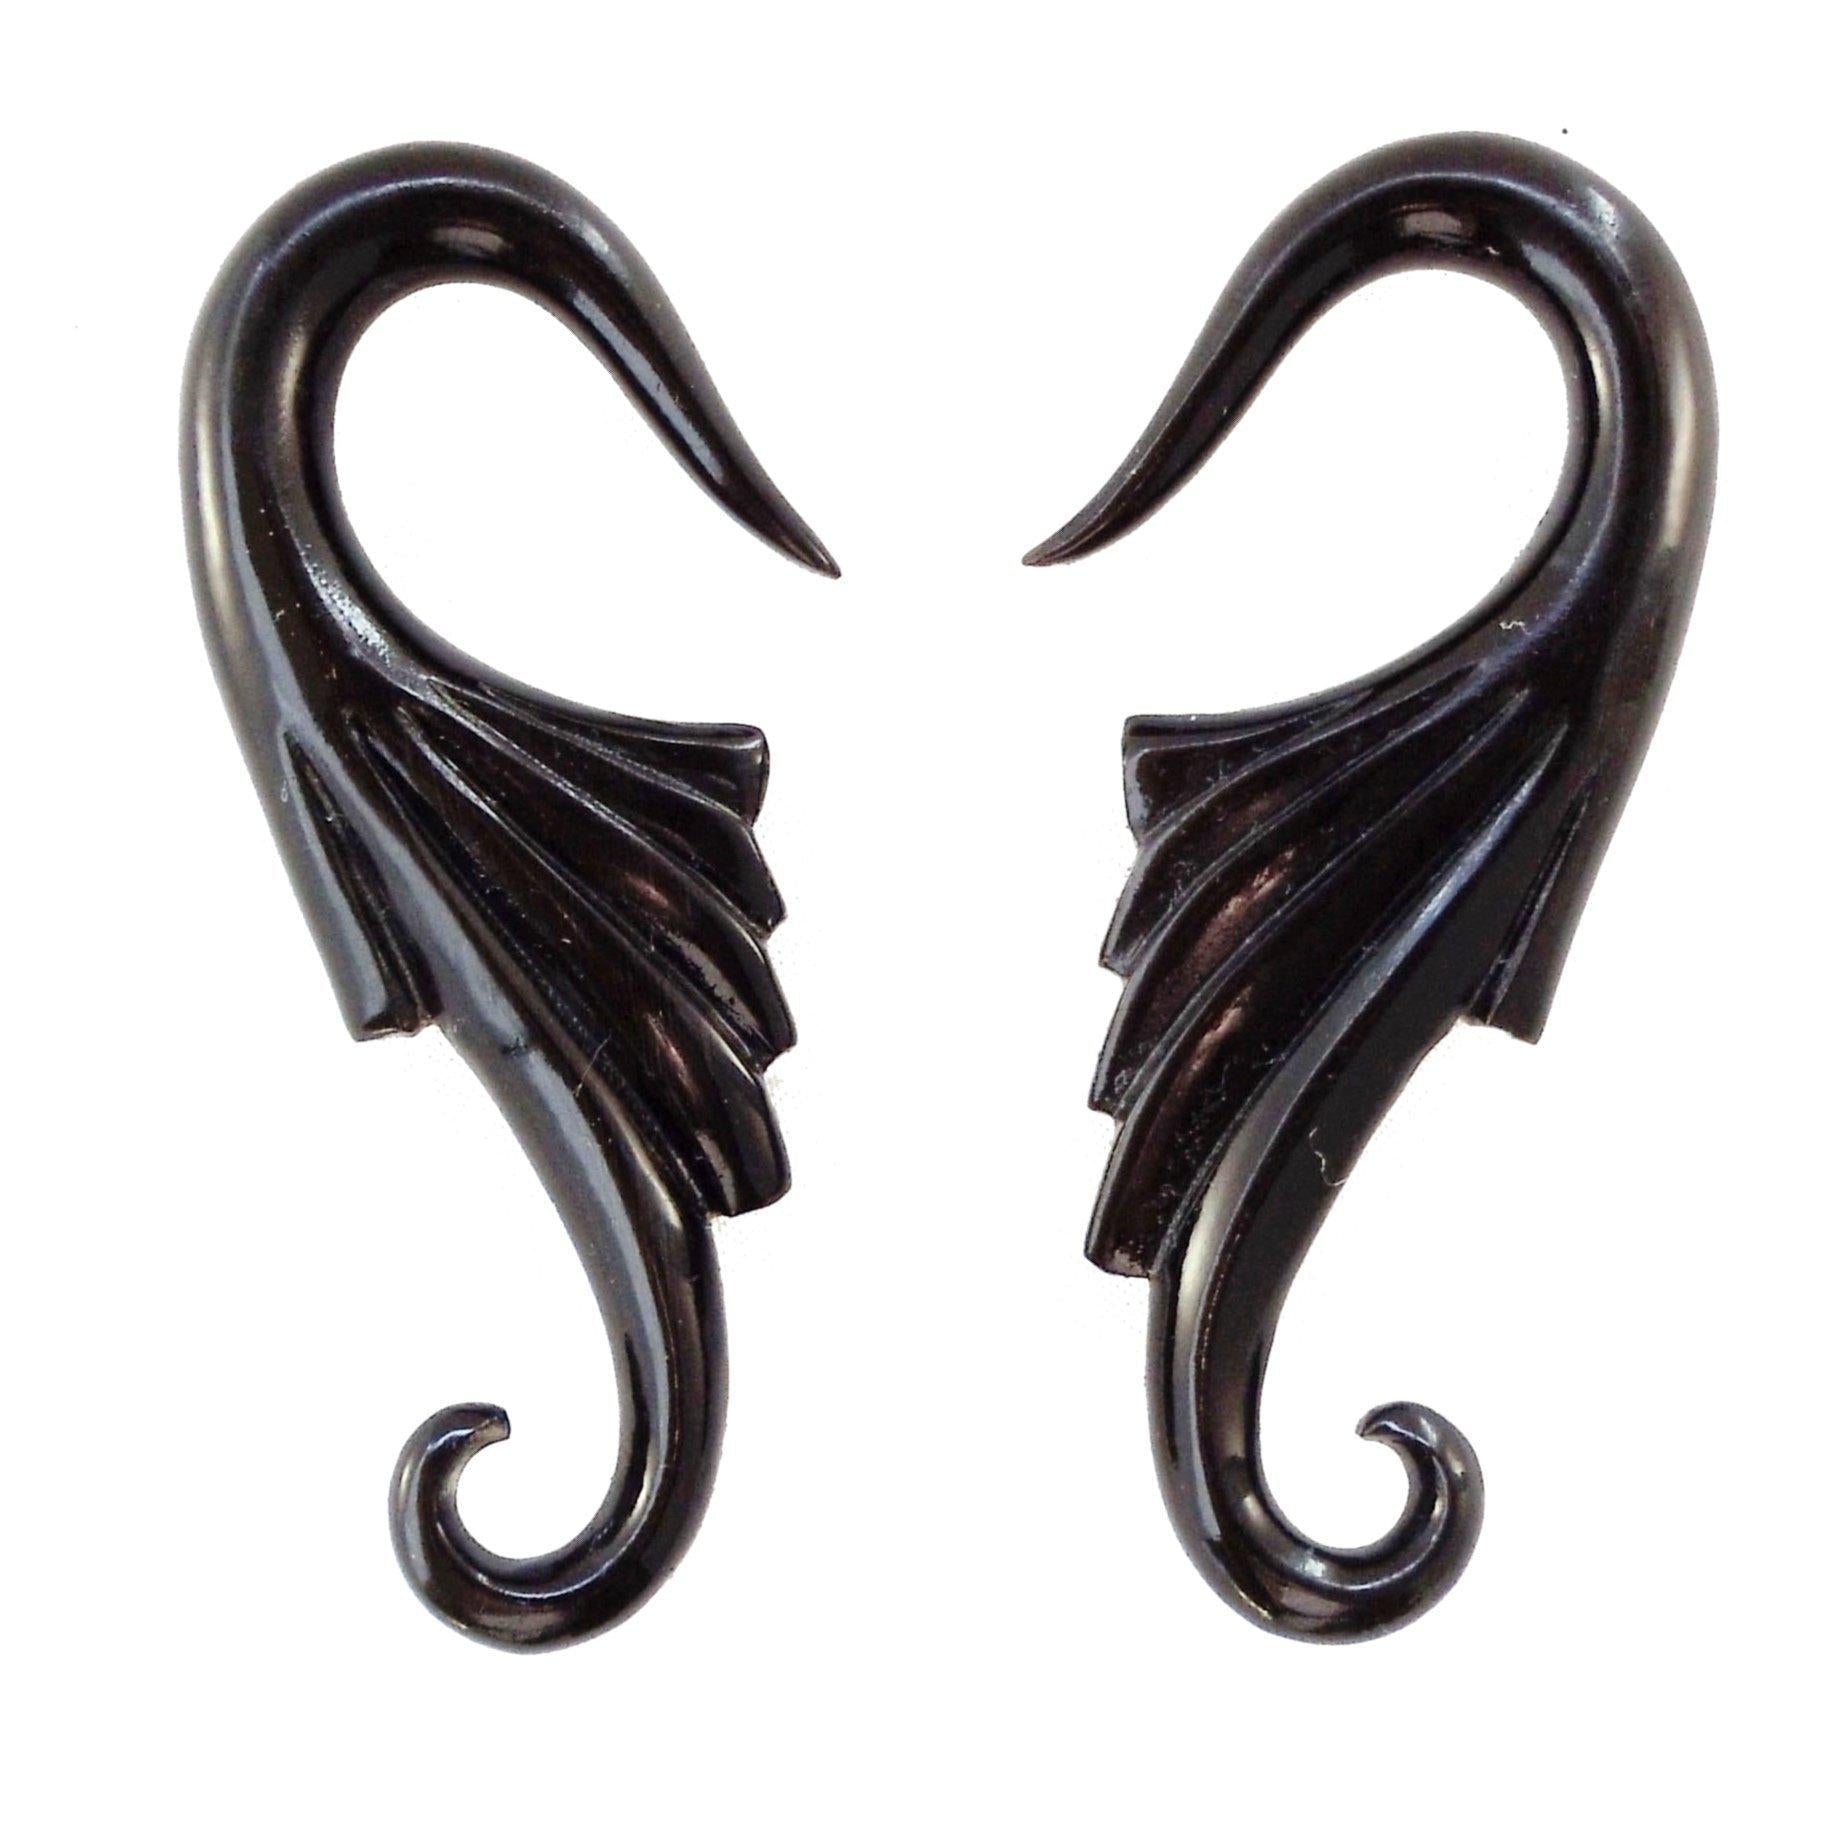 Body Jewelry :|: Nouveau Wings. Horn 4g, Organic Body Jewelry. | Gauges horn carved jewelry, 4 gauge earrings.